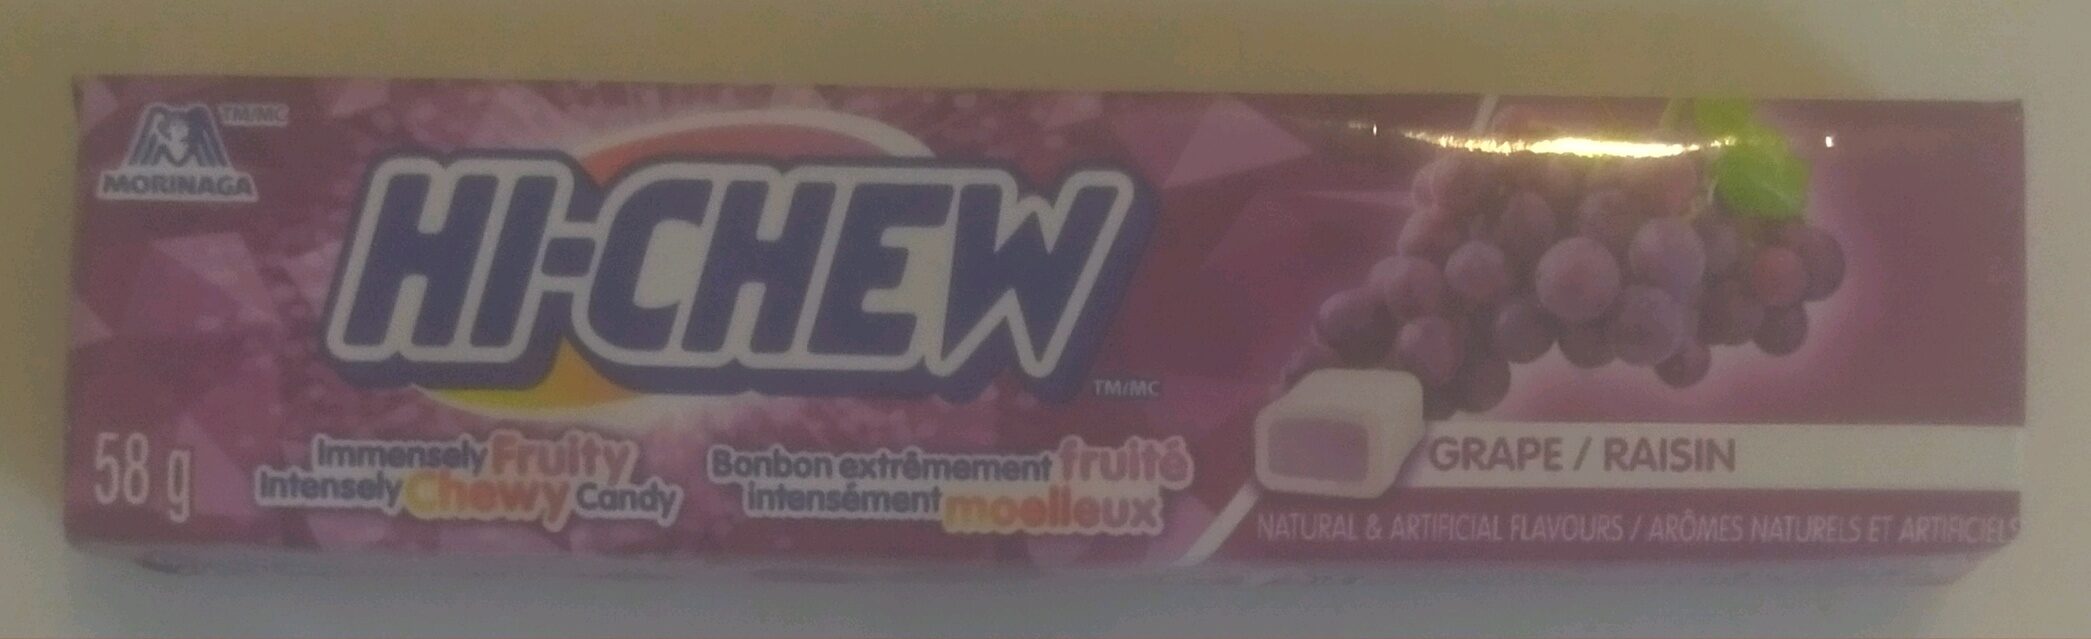 Grape Hi-Chew - Product